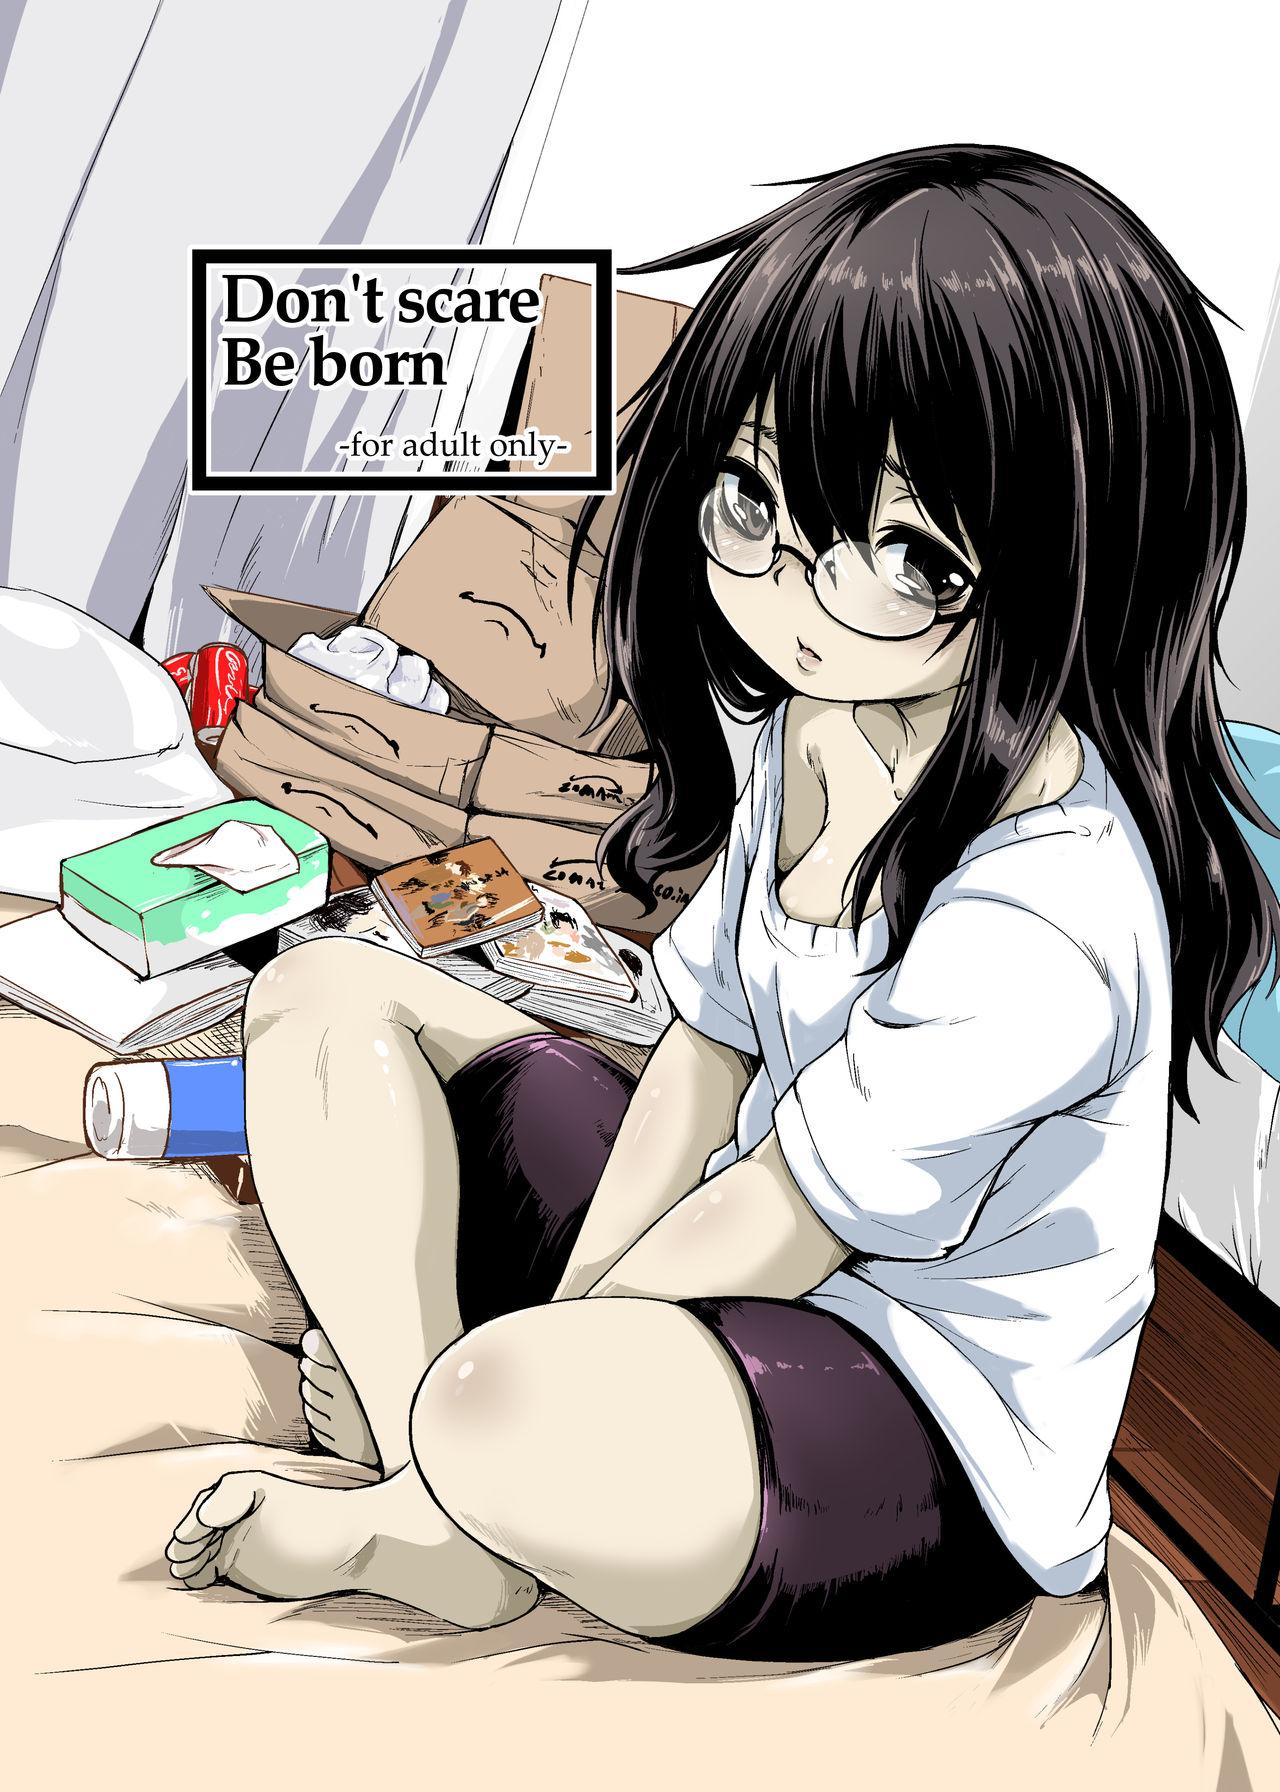 Don't scare be born + Botsu tta manga desu. 0